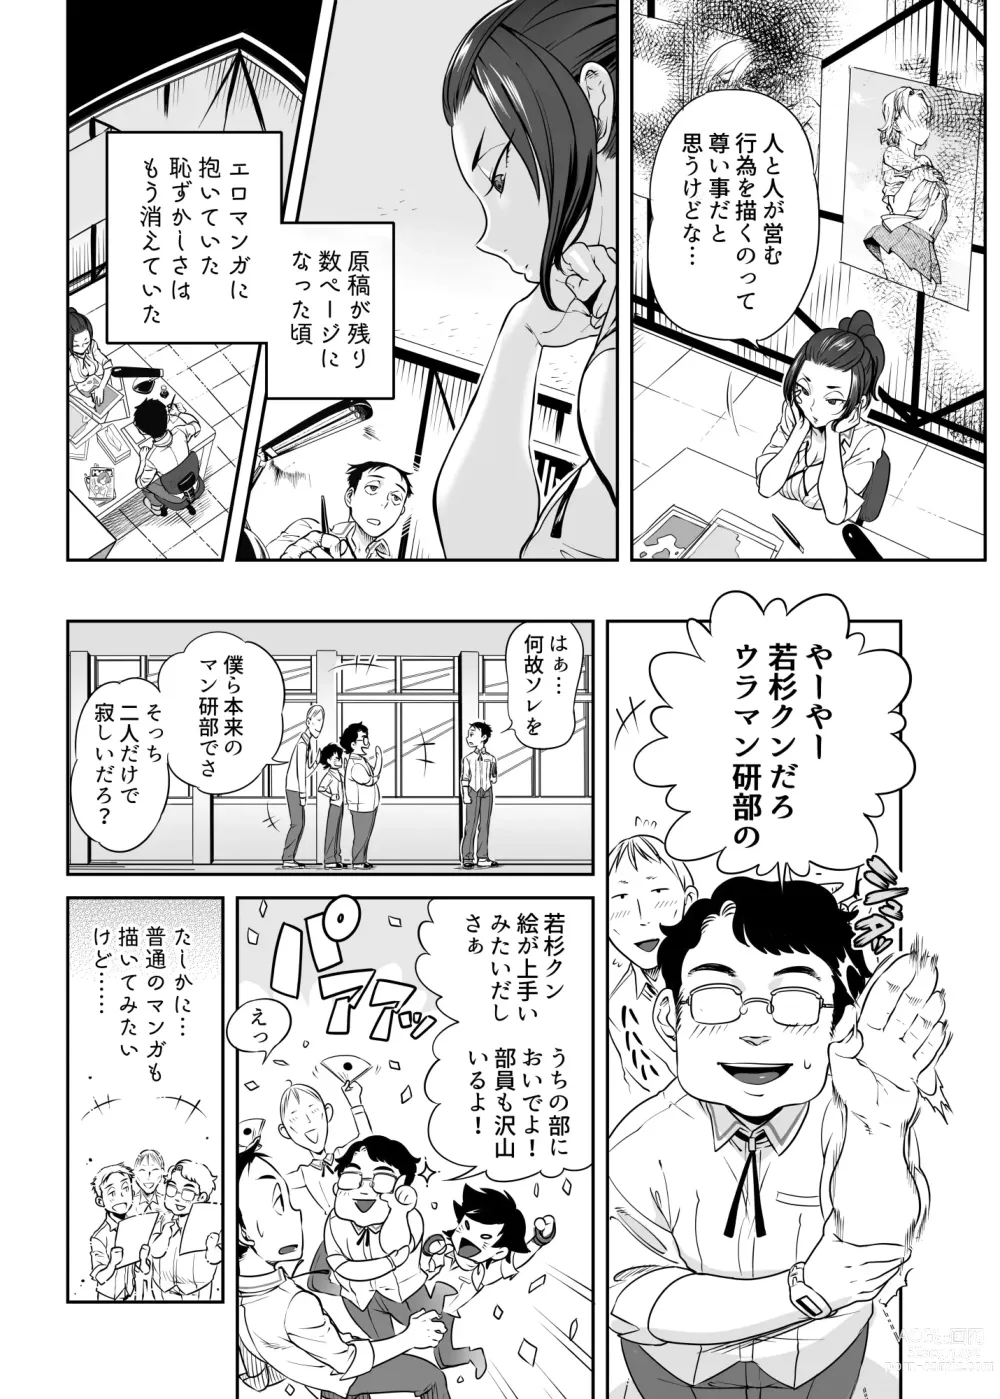 Page 17 of doujinshi URAMAN: Eromanga-bu e Youkoso